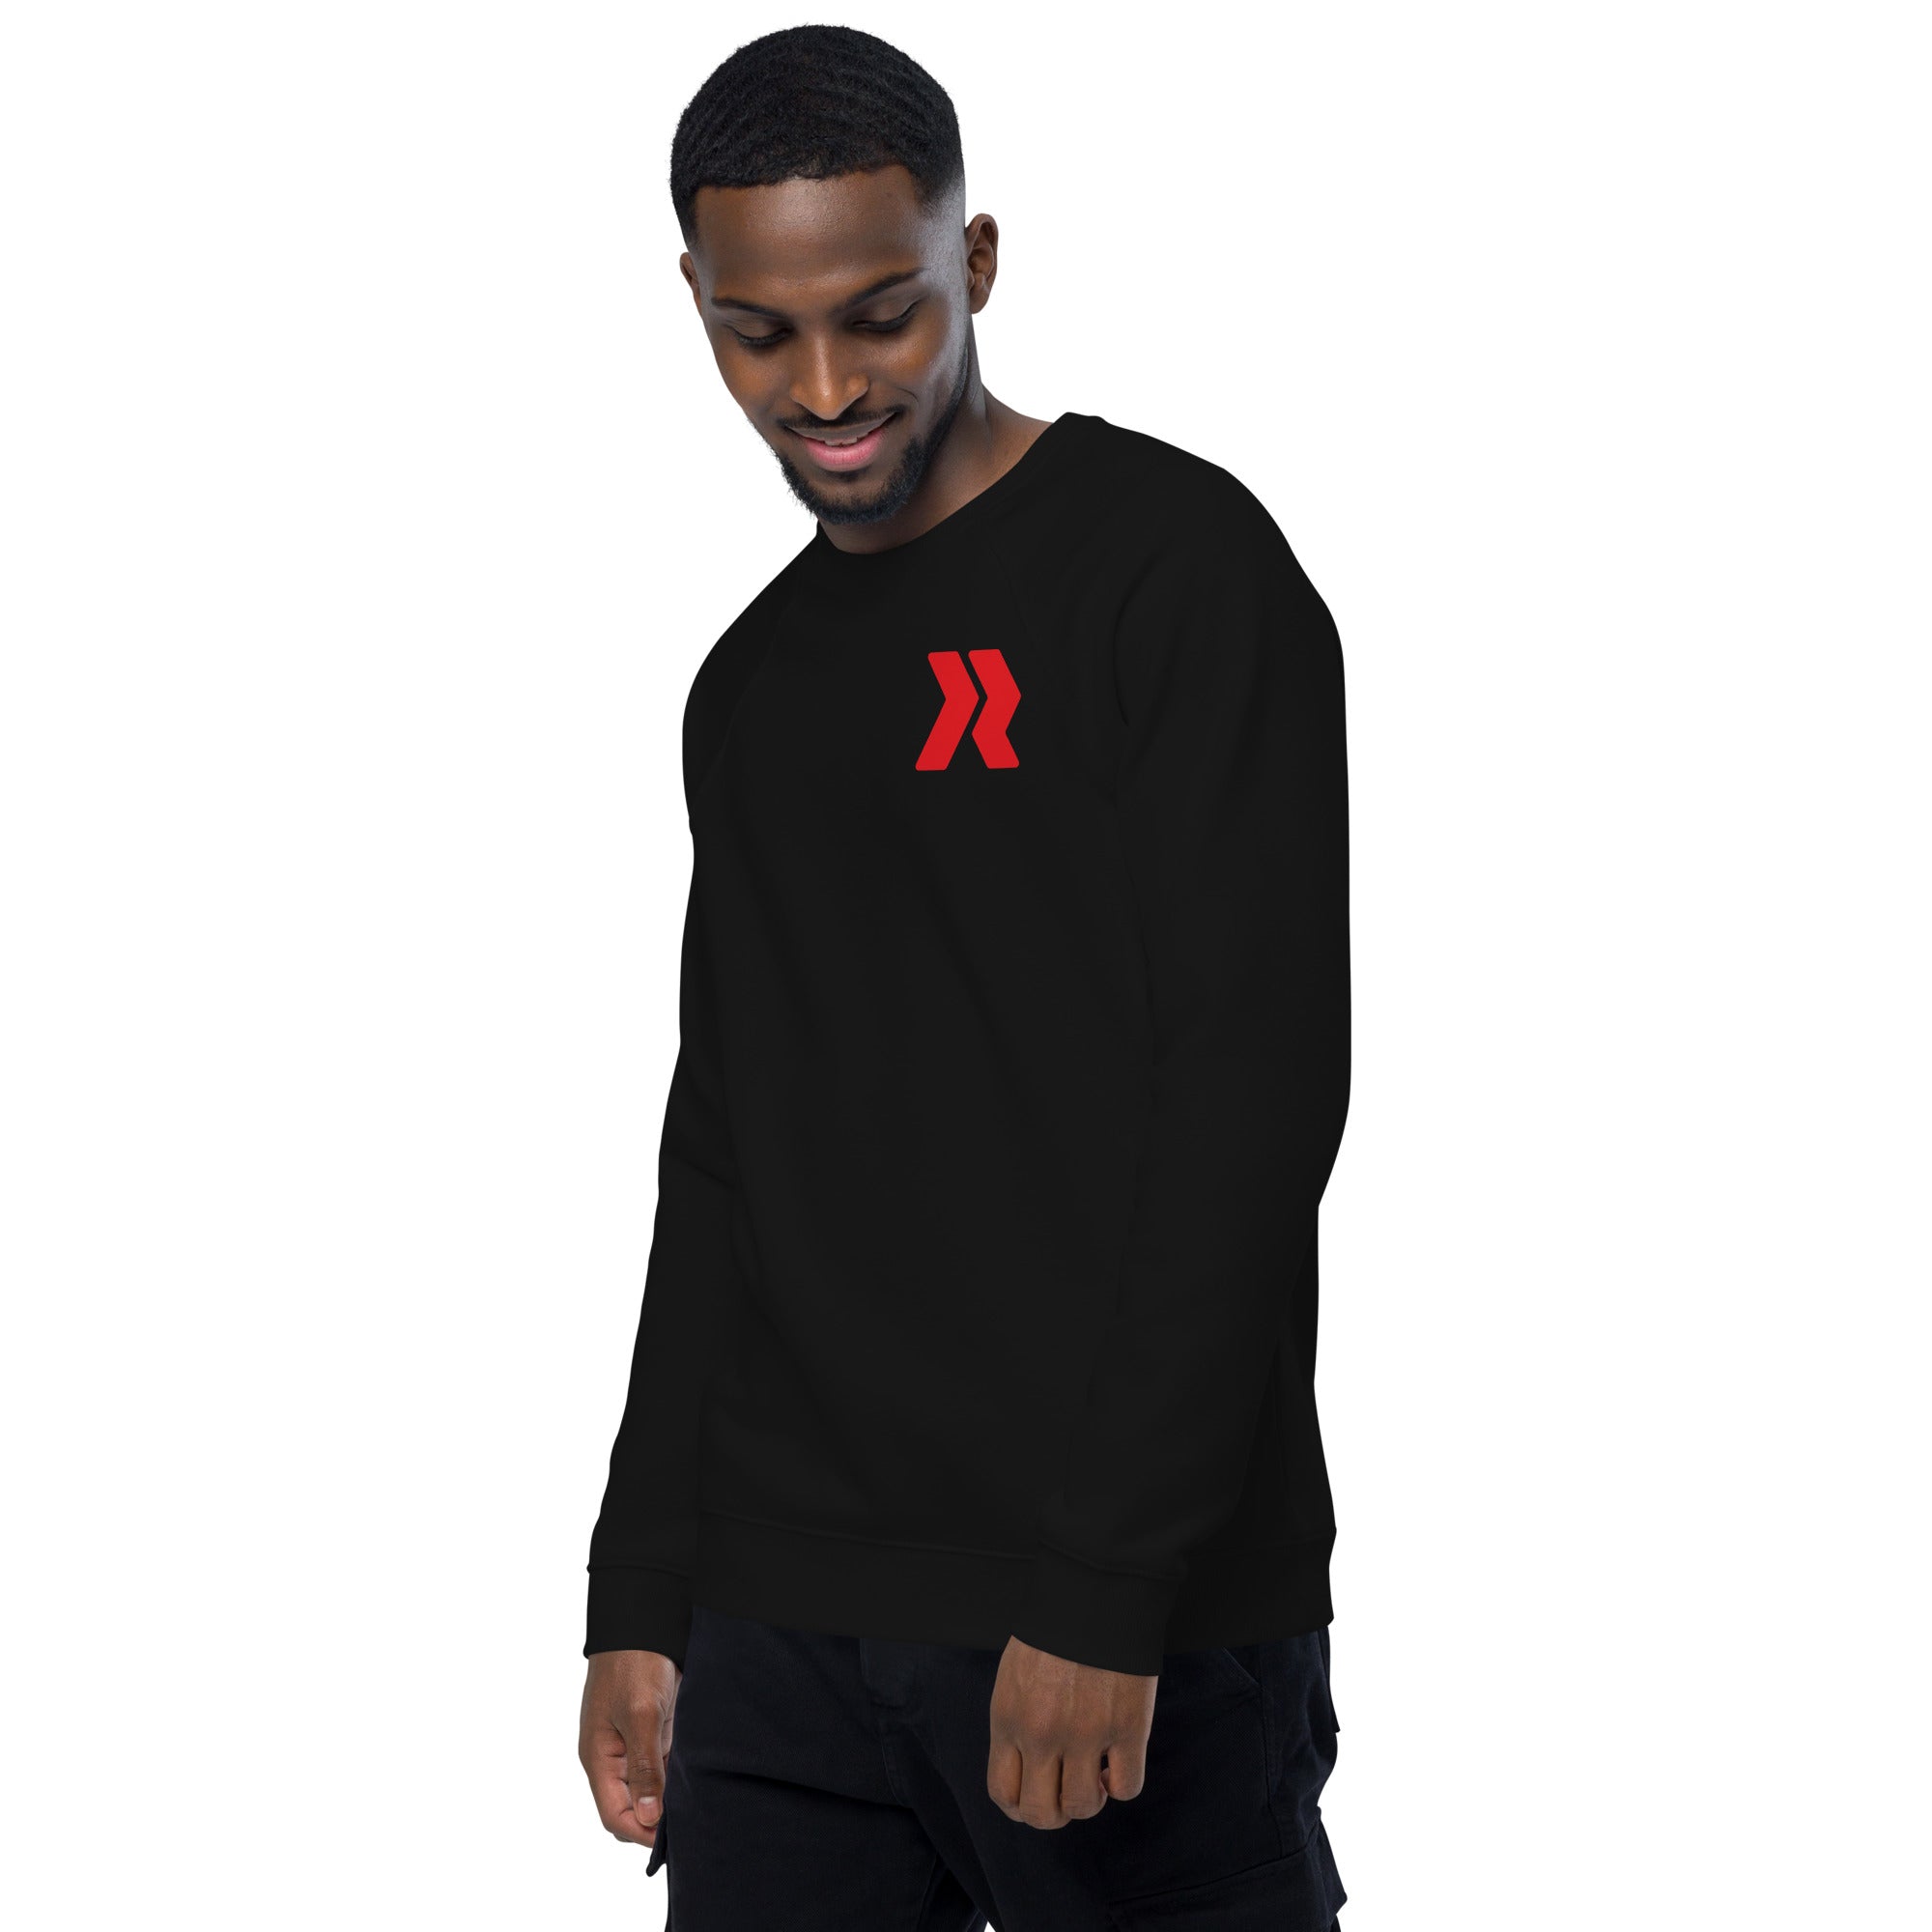 Maumee Logo R - R/W - Black Unisex organic raglan sweatshirt